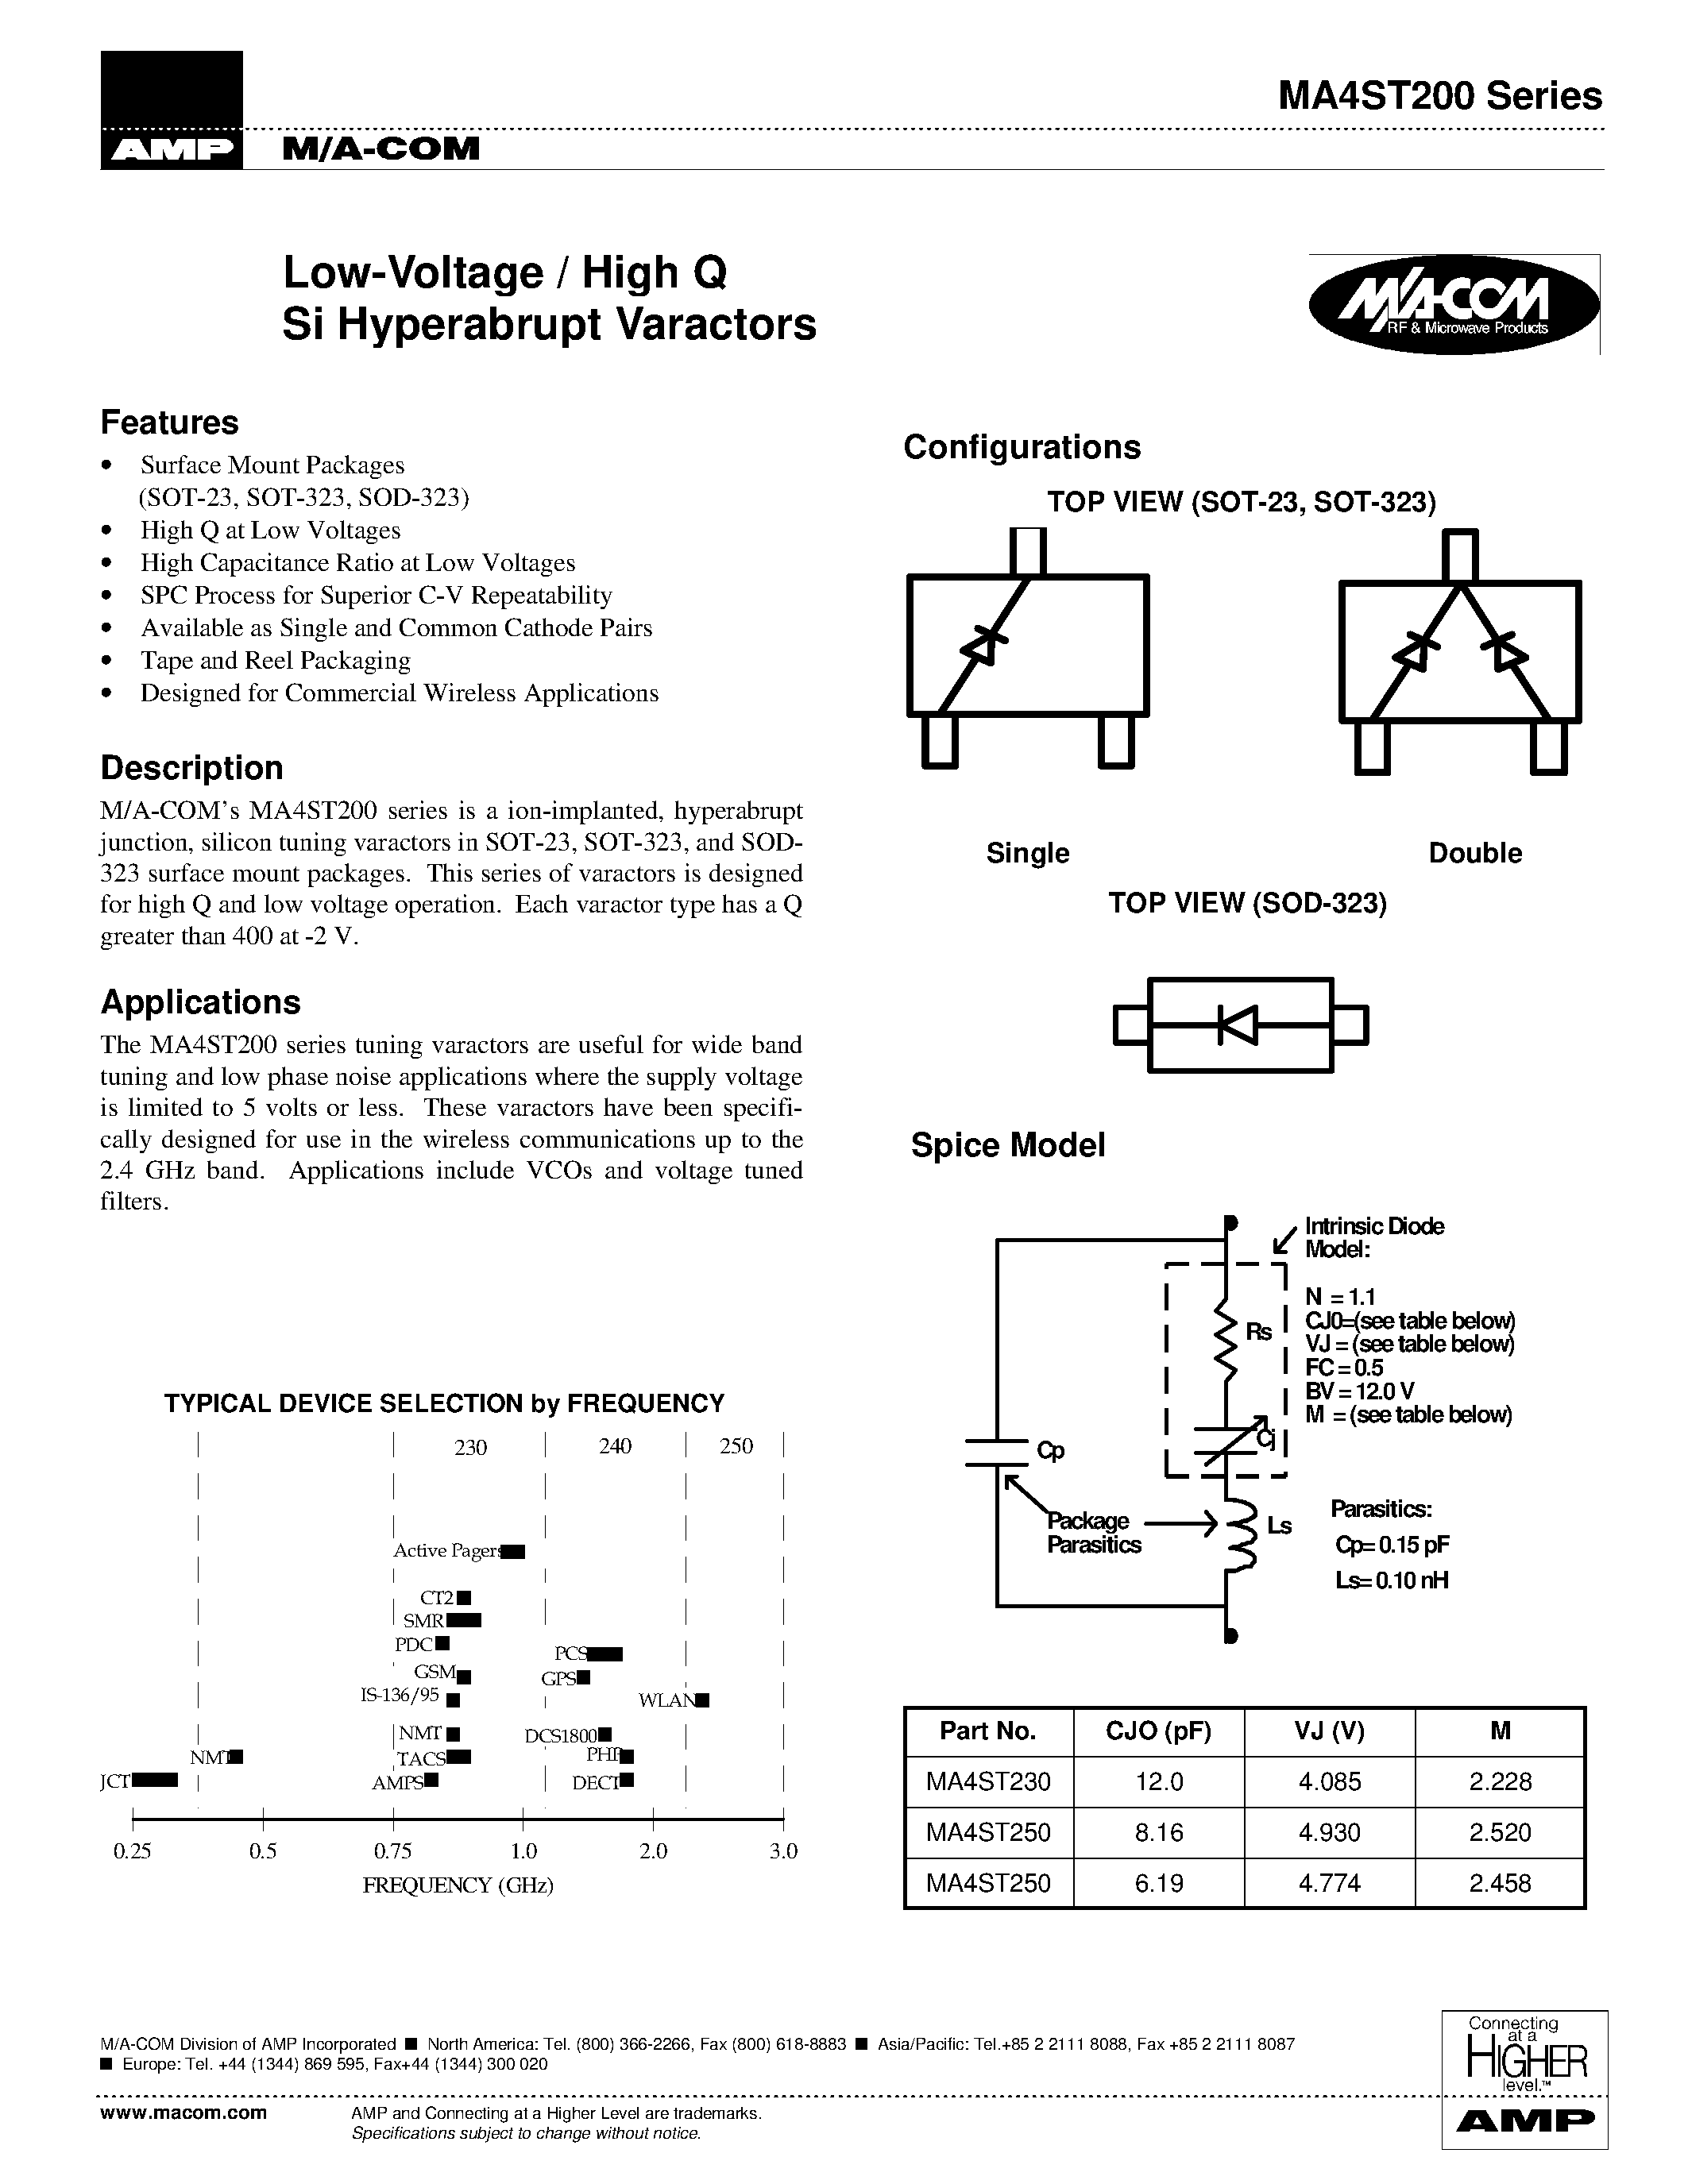 Даташит MA4ST200 - Low-Voltage / High Q Si Hyperabrupt Varactors страница 1